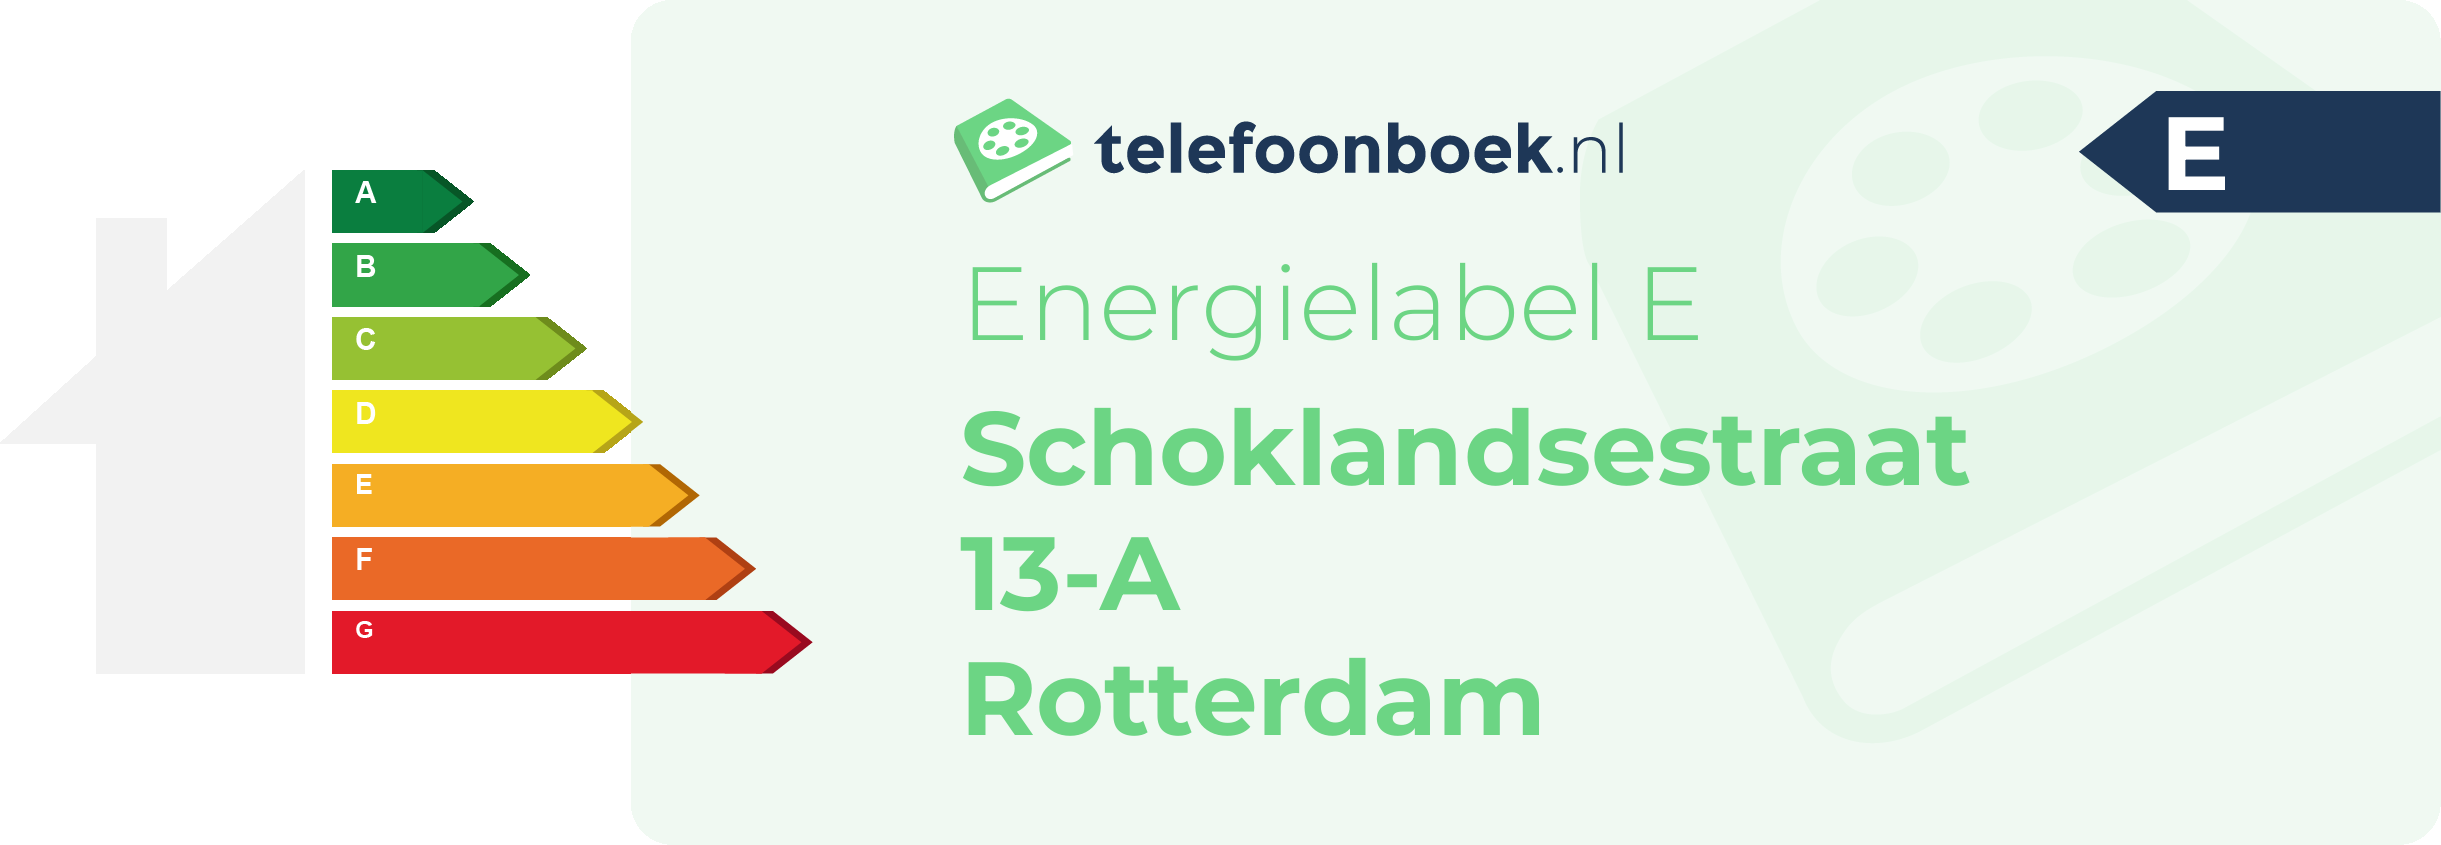 Energielabel Schoklandsestraat 13-A Rotterdam